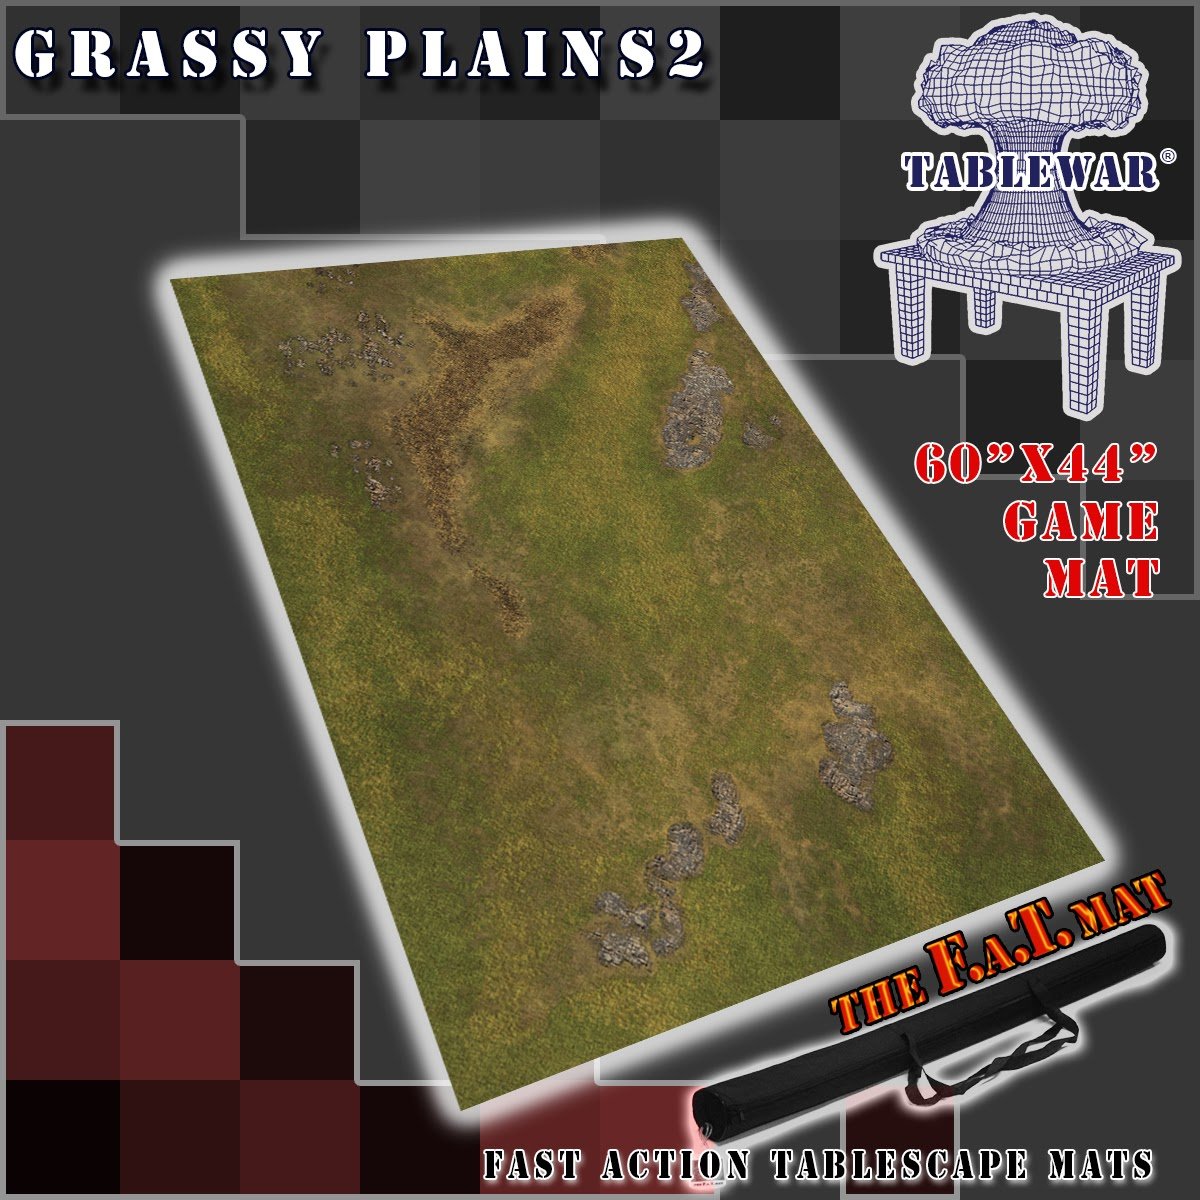 F.A.T. Mats: Grassy Plains 2 60X44" 